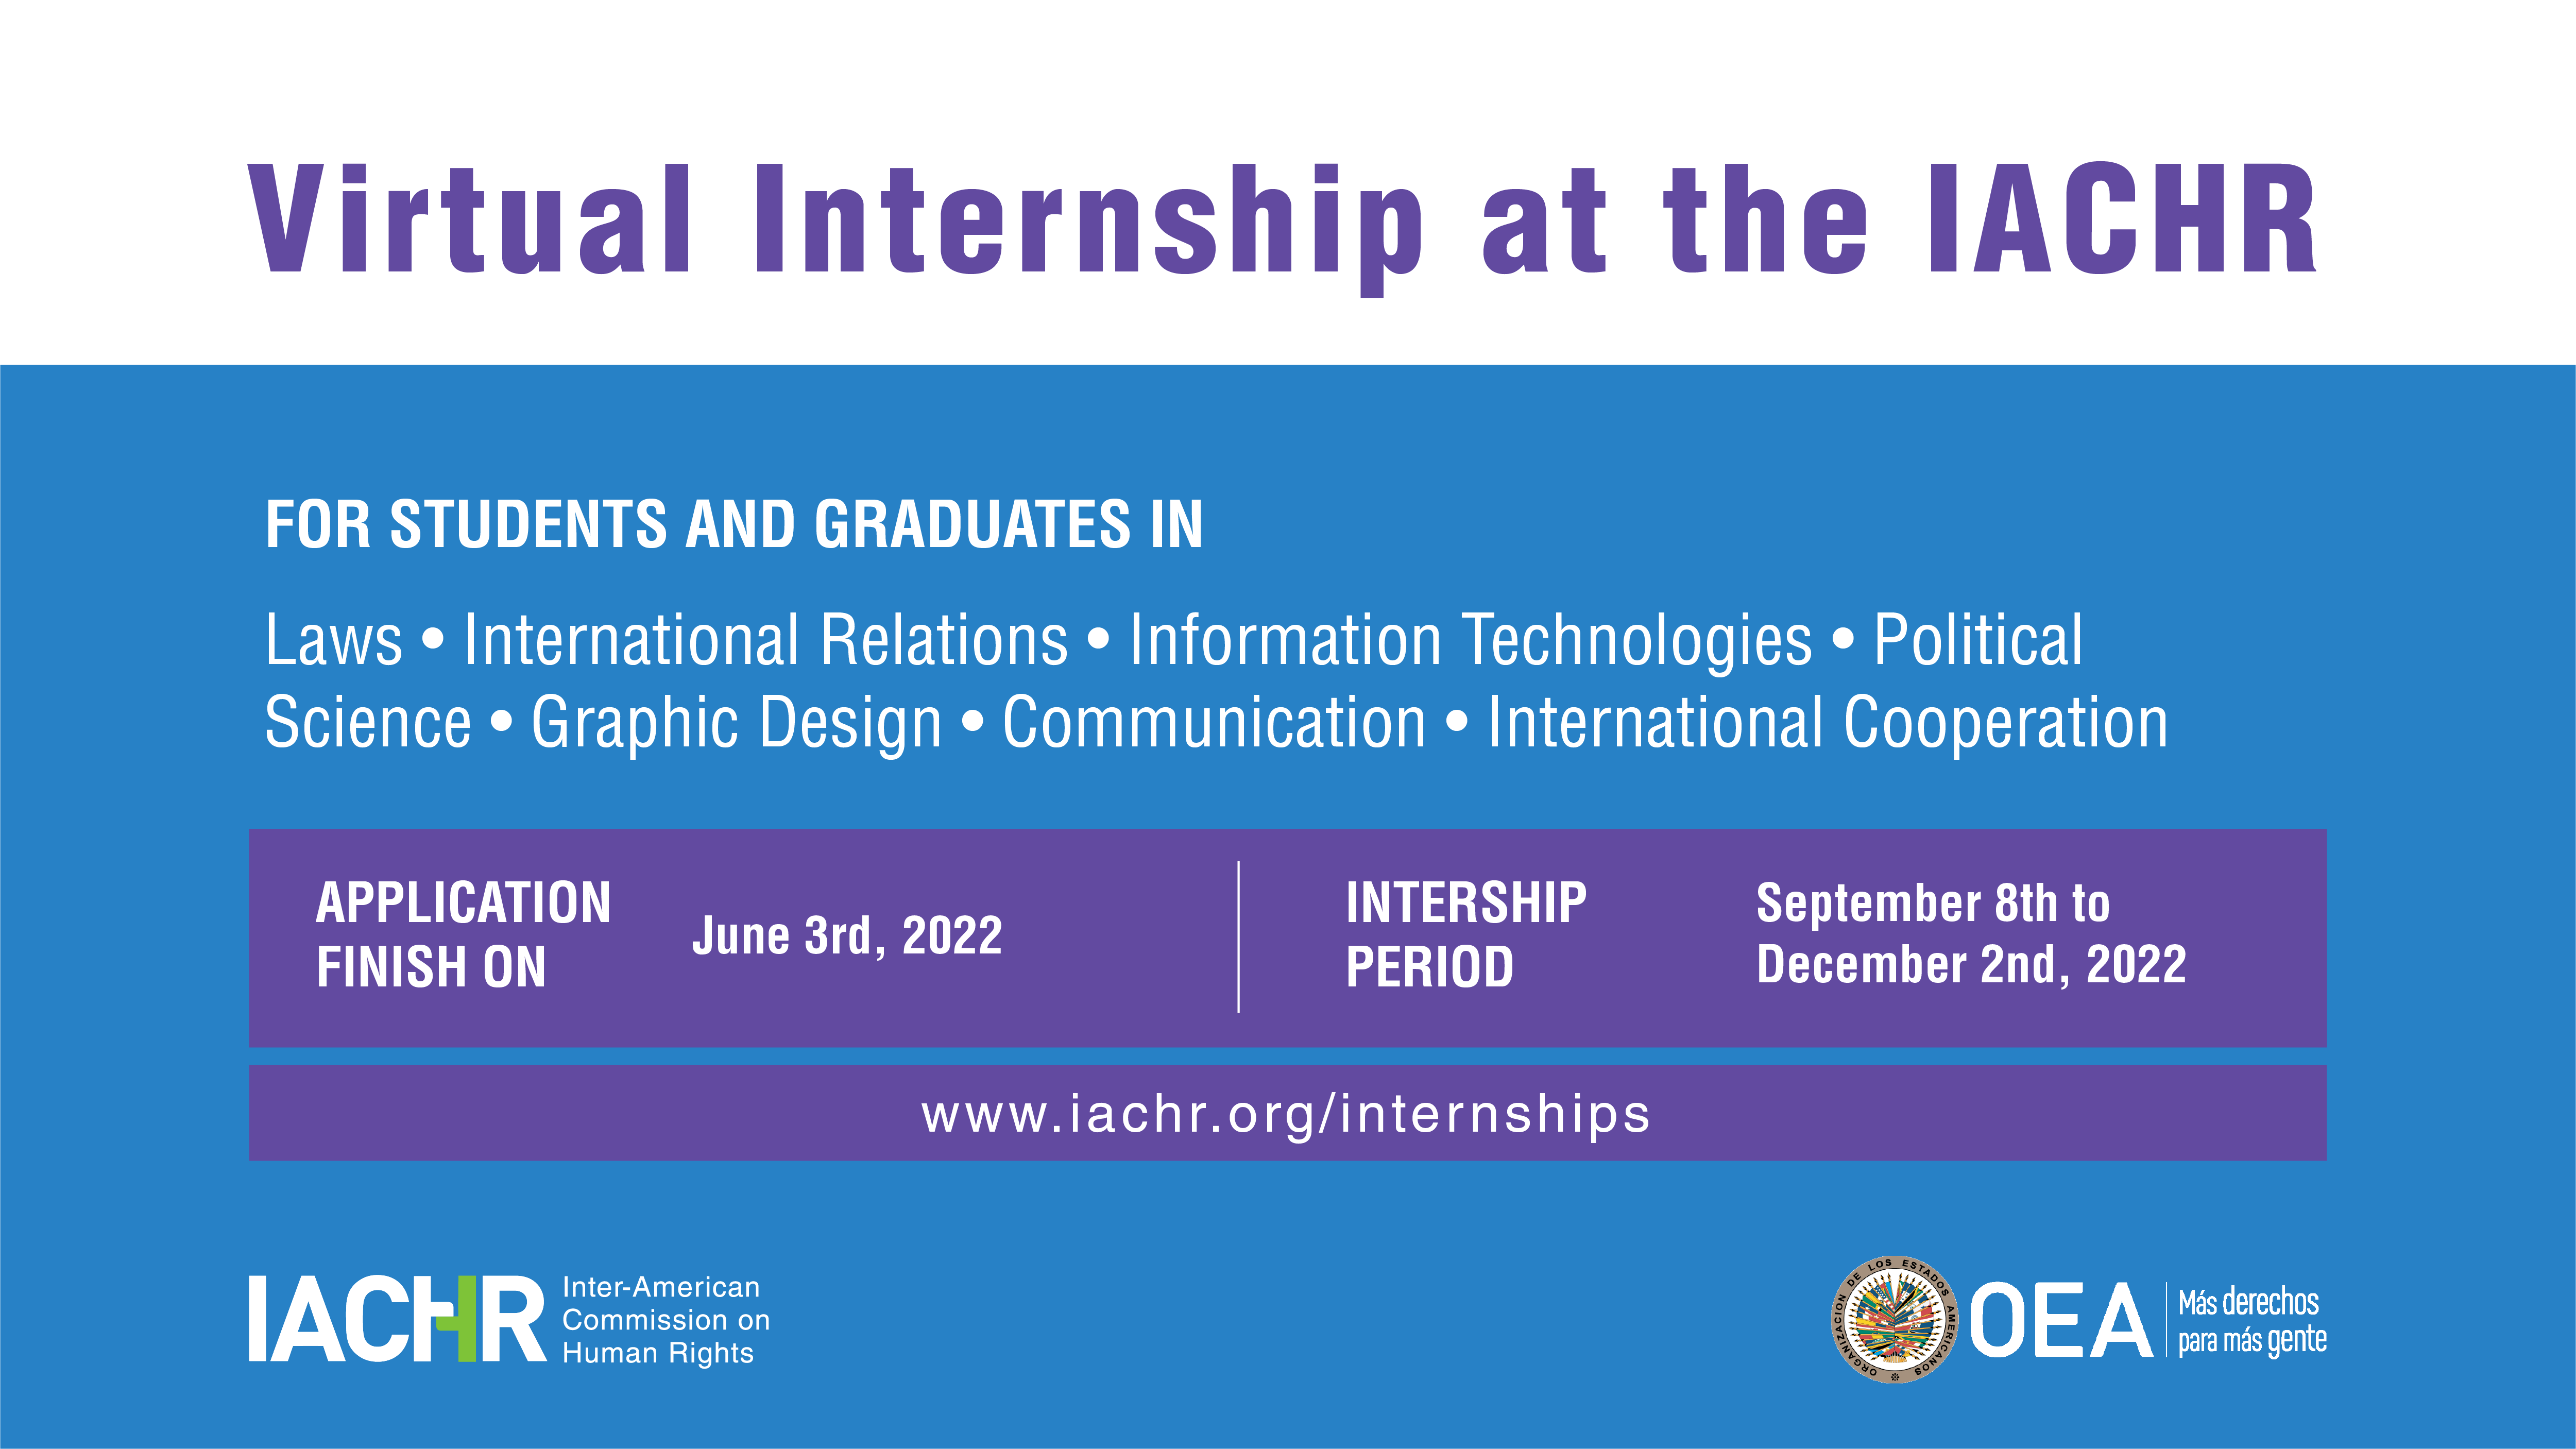 Internships at the IACHR